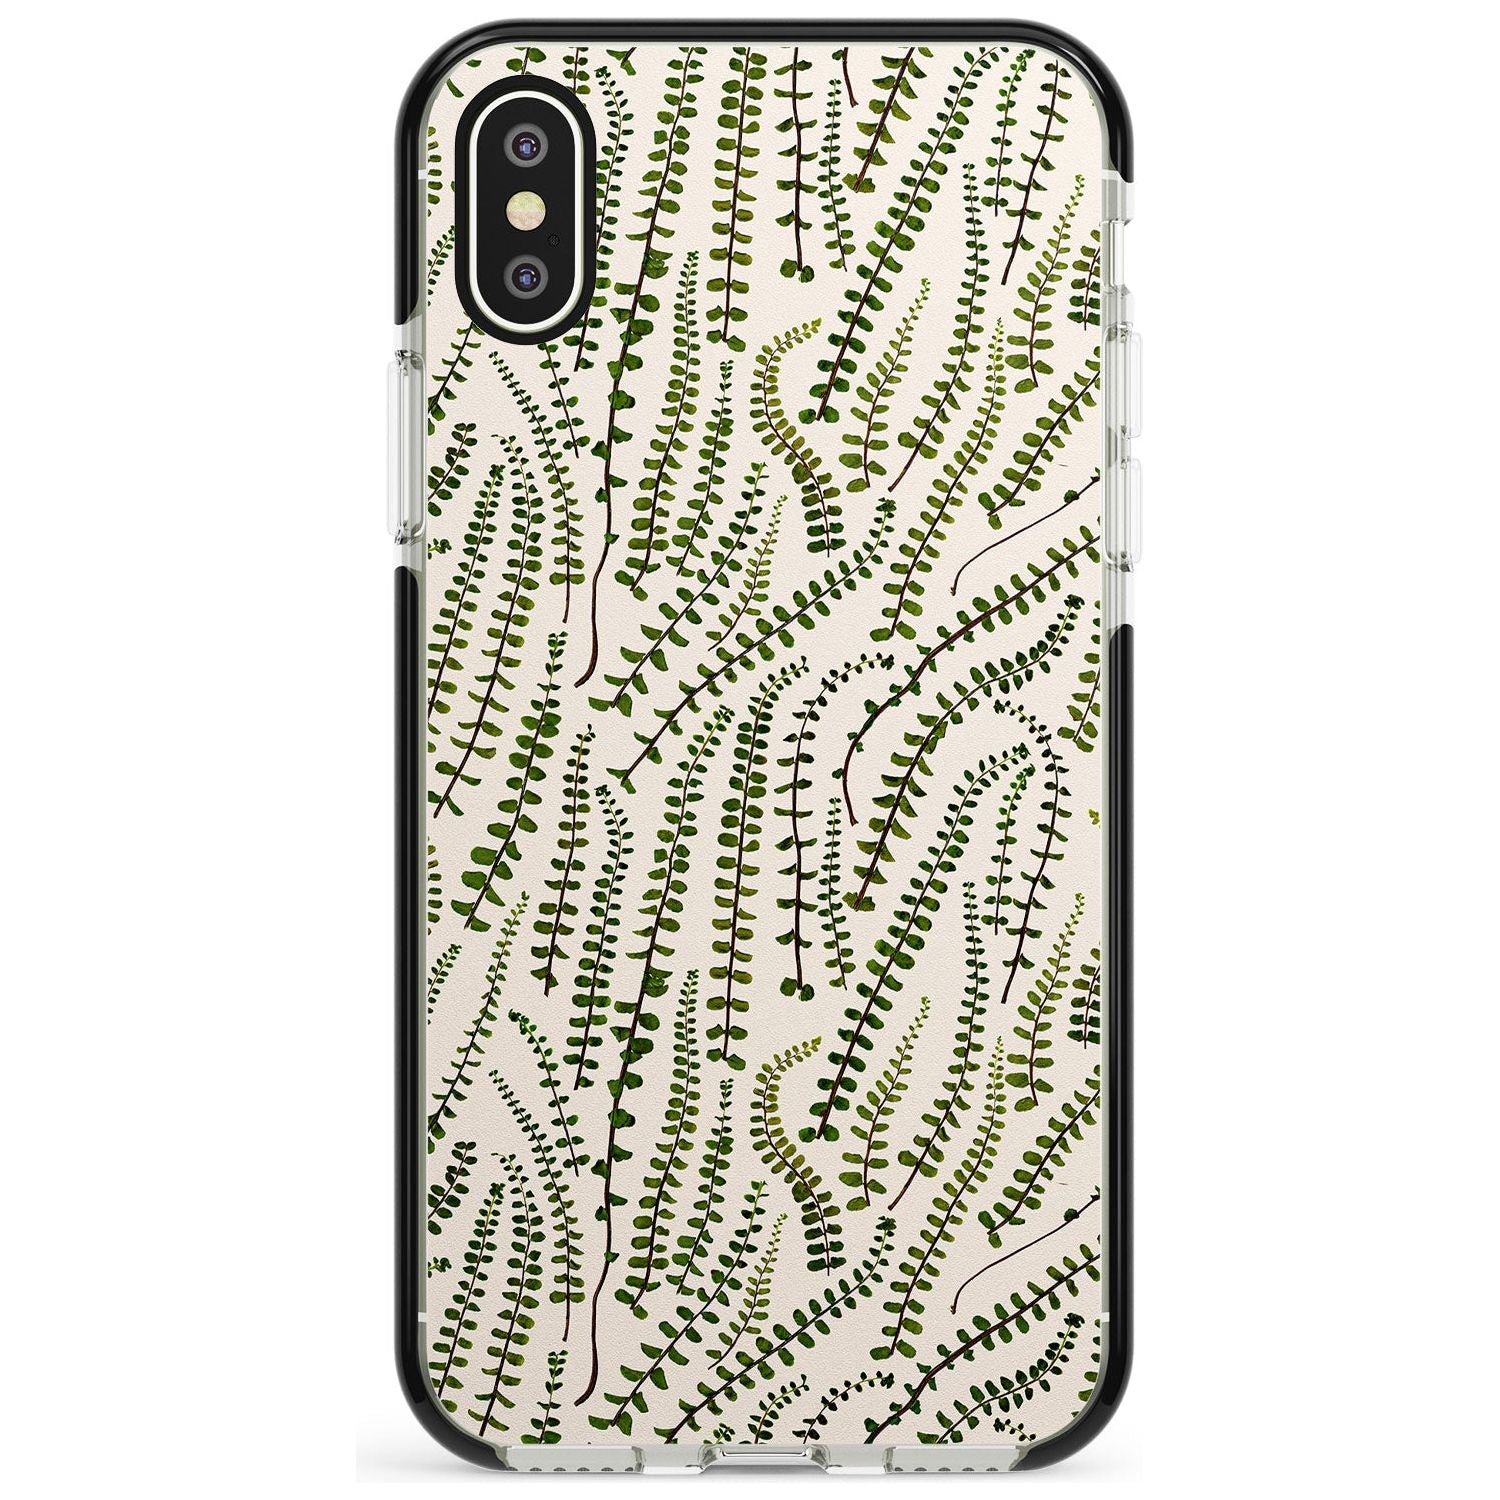 Fern Leaf Pattern Design - Cream Black Impact Phone Case for iPhone X XS Max XR